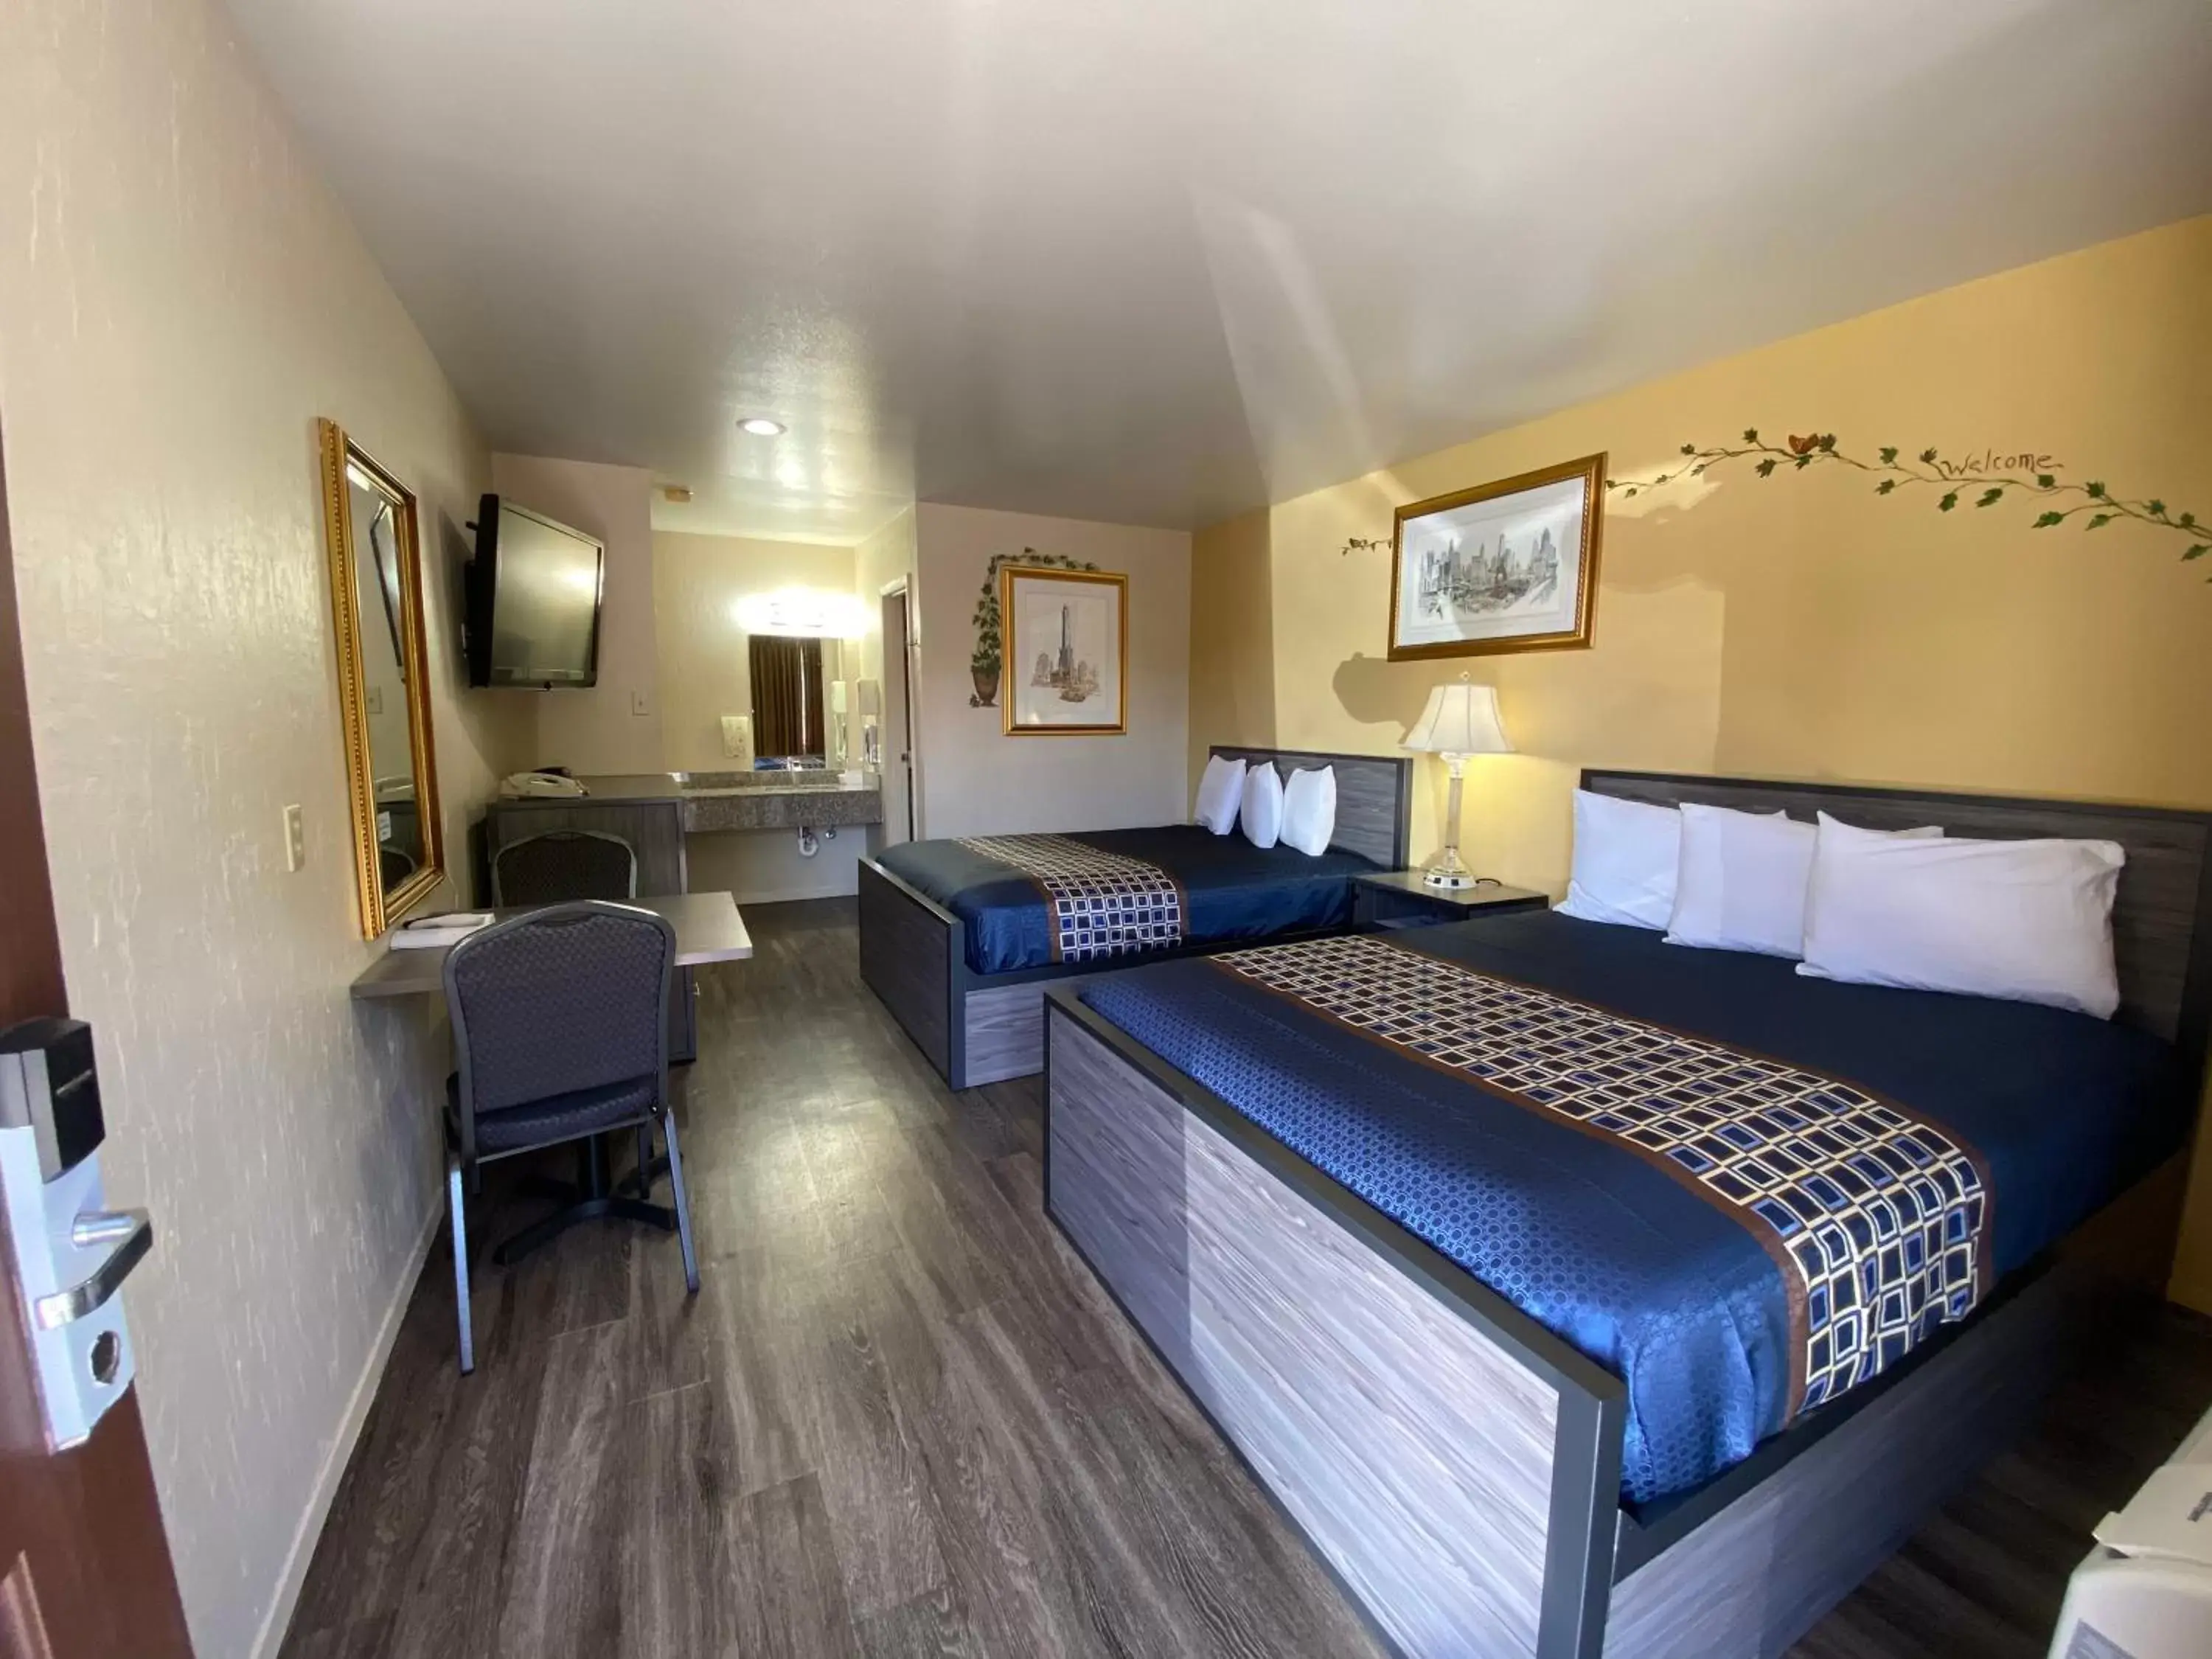 Photo of the whole room in Americas Best Value Inn - Legend's Inn